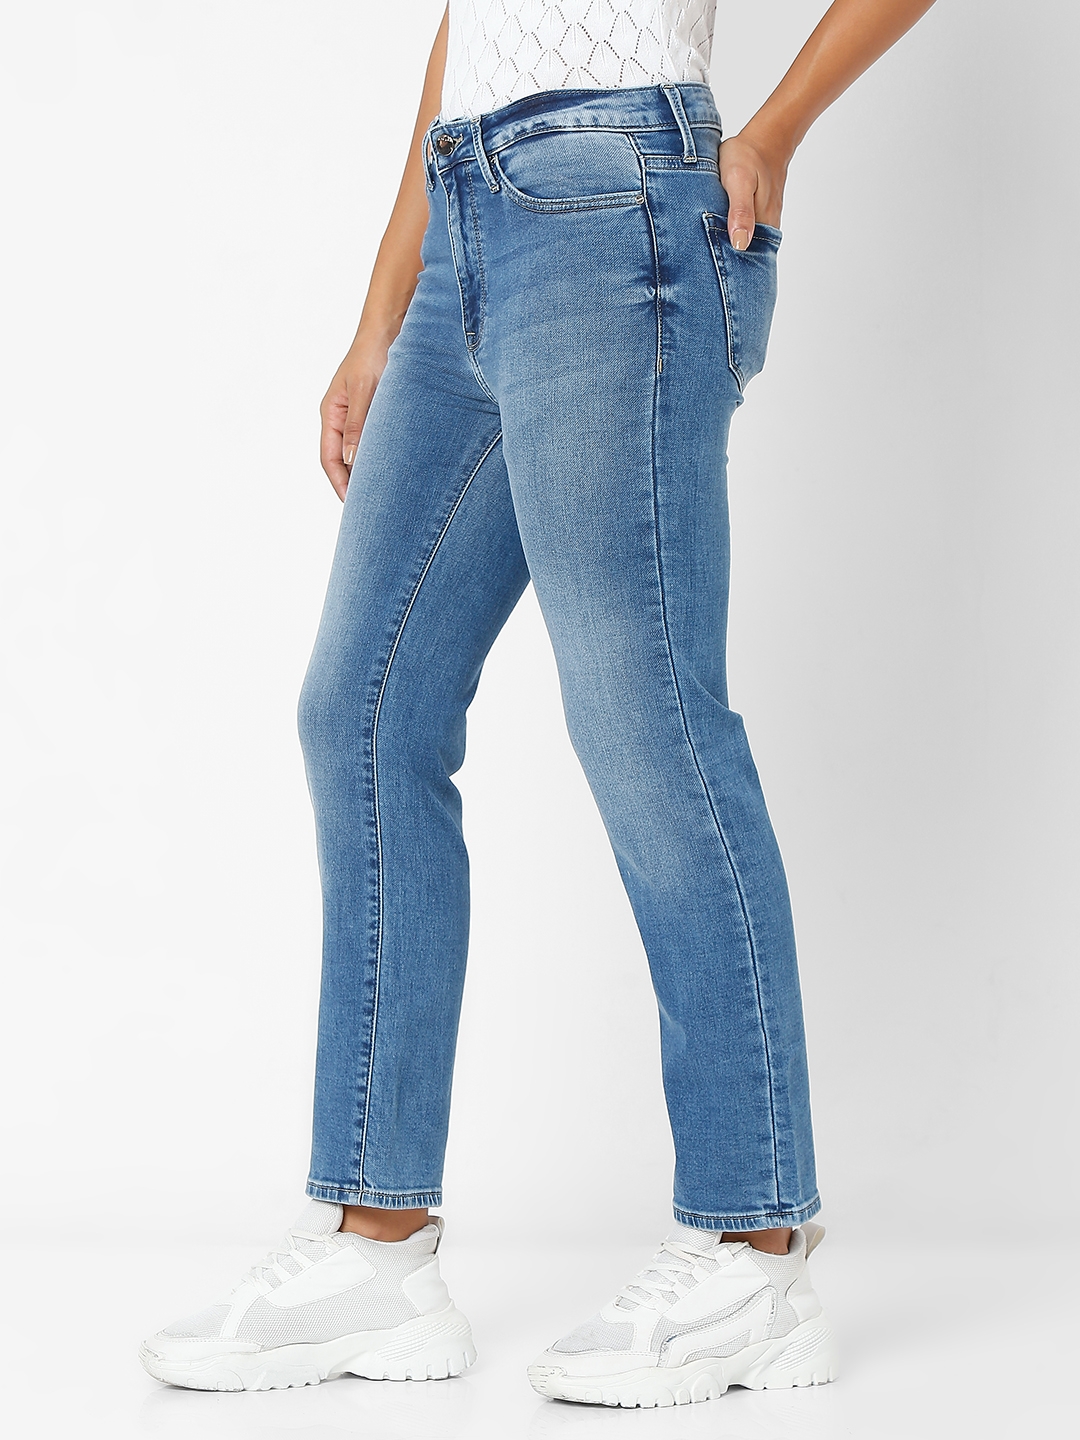 spykar | Women's Blue Cotton Solid Slim Jeans 1